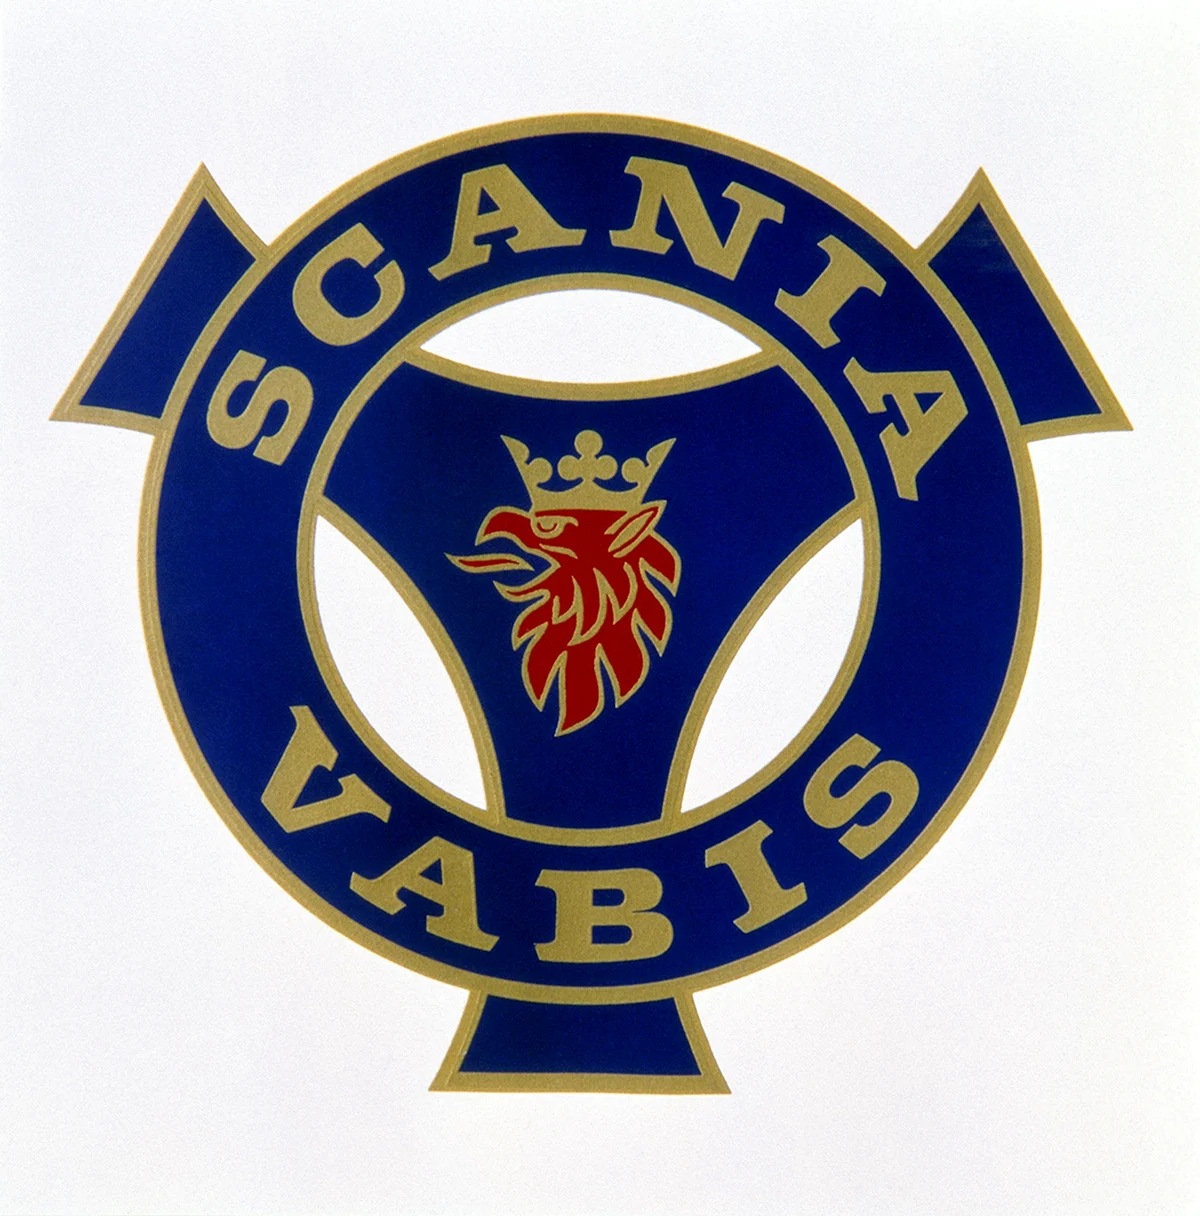 Scania Vabis logo